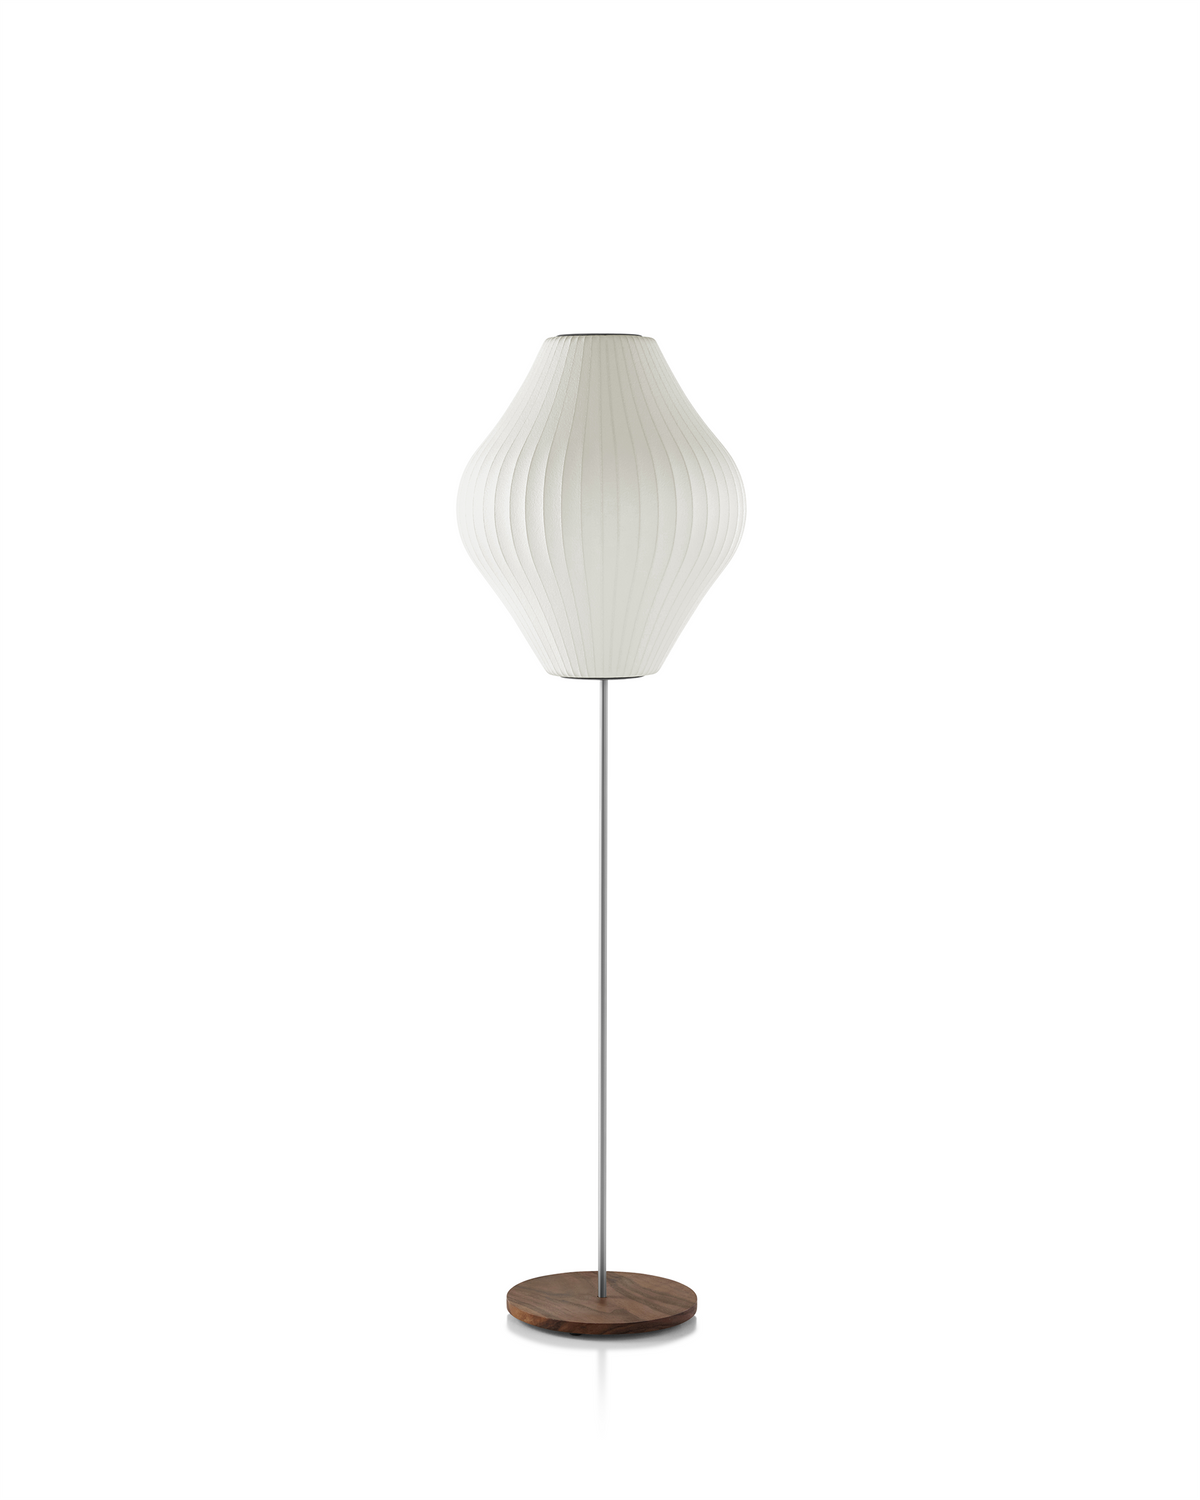 Nelson Pear Floor Lamp